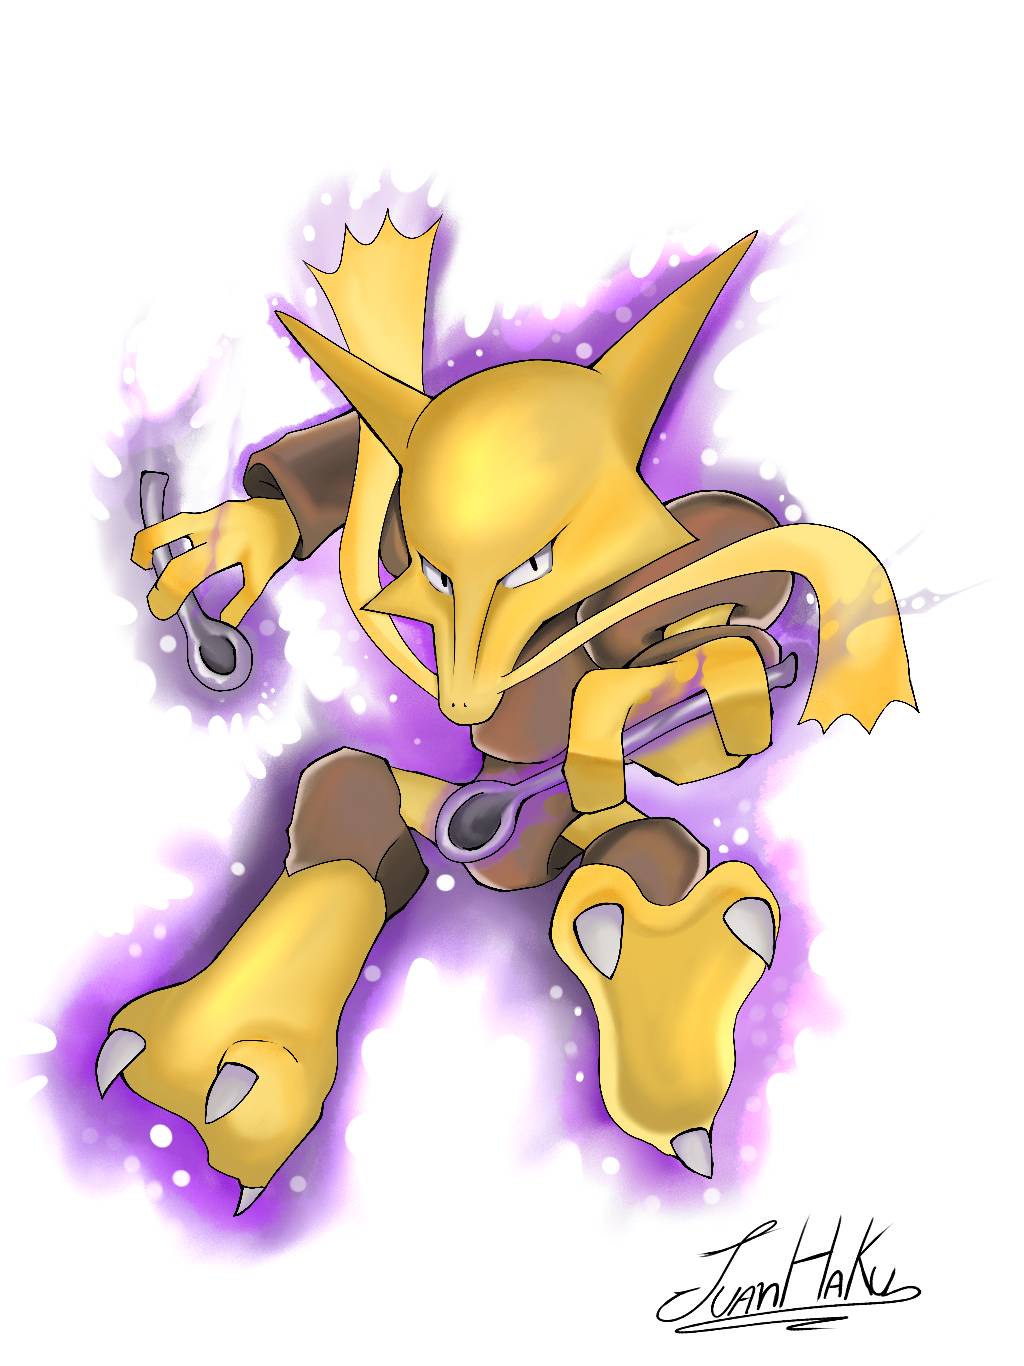 Shiny Lucario Pokemon Ranger Edit by hf978rh7834hru4r43 on DeviantArt